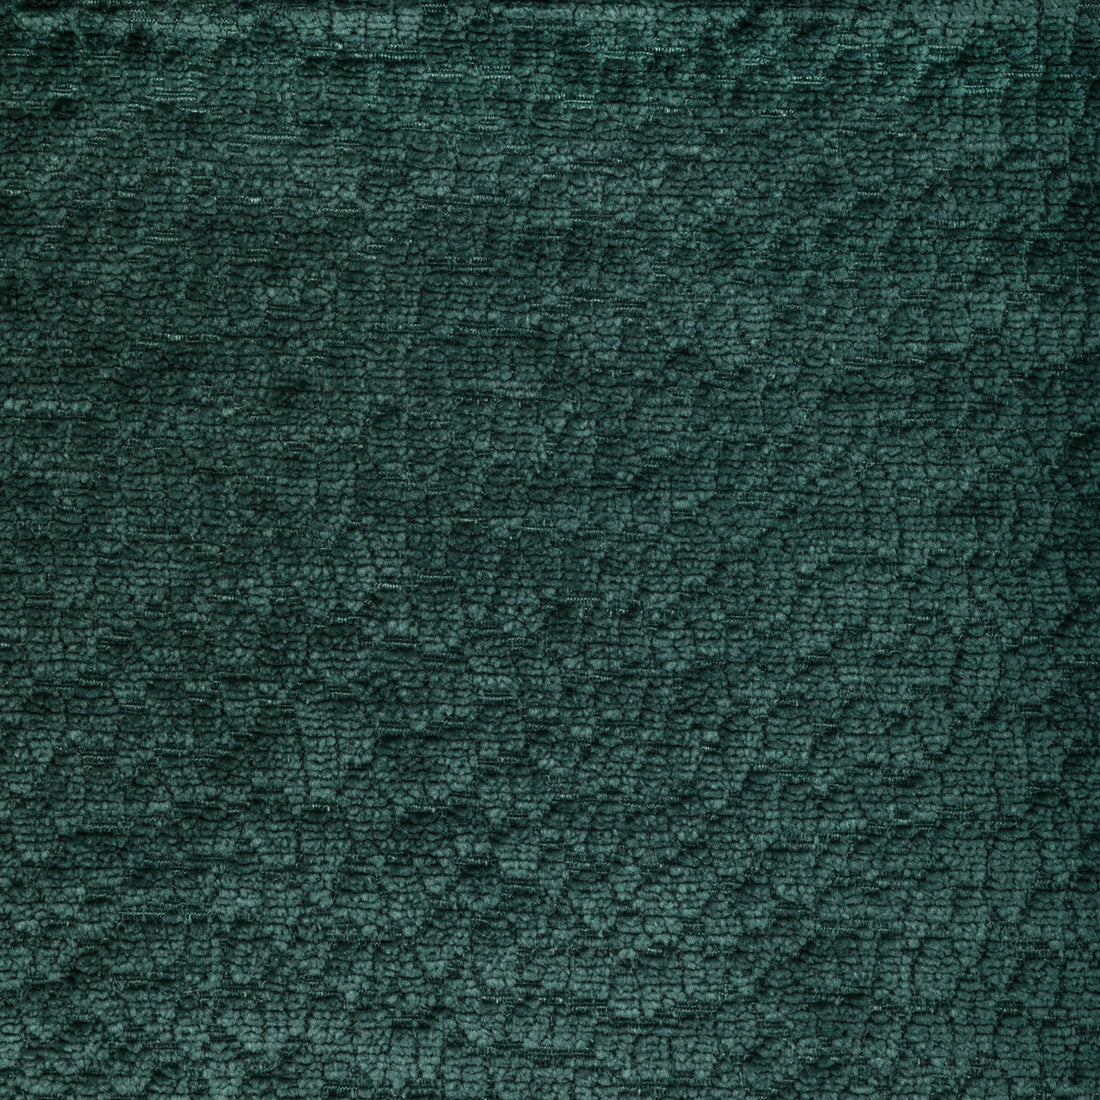 Kravet Smart fabric in 36606-35 color - pattern 36606.35.0 - by Kravet Smart in the Performance Kravetarmor collection